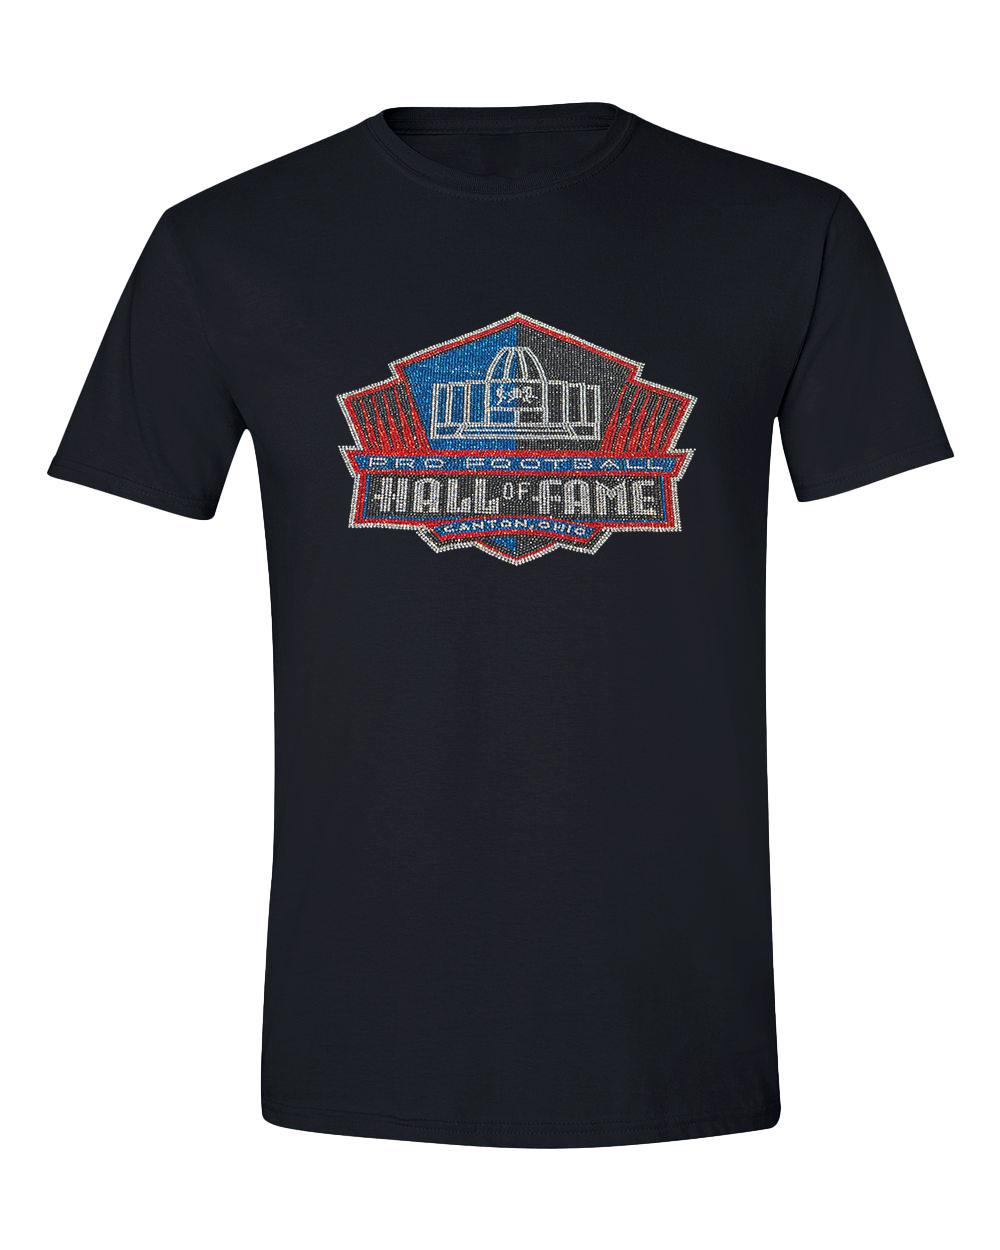 Hall of Fame Women's Rhinestone T-Shirt